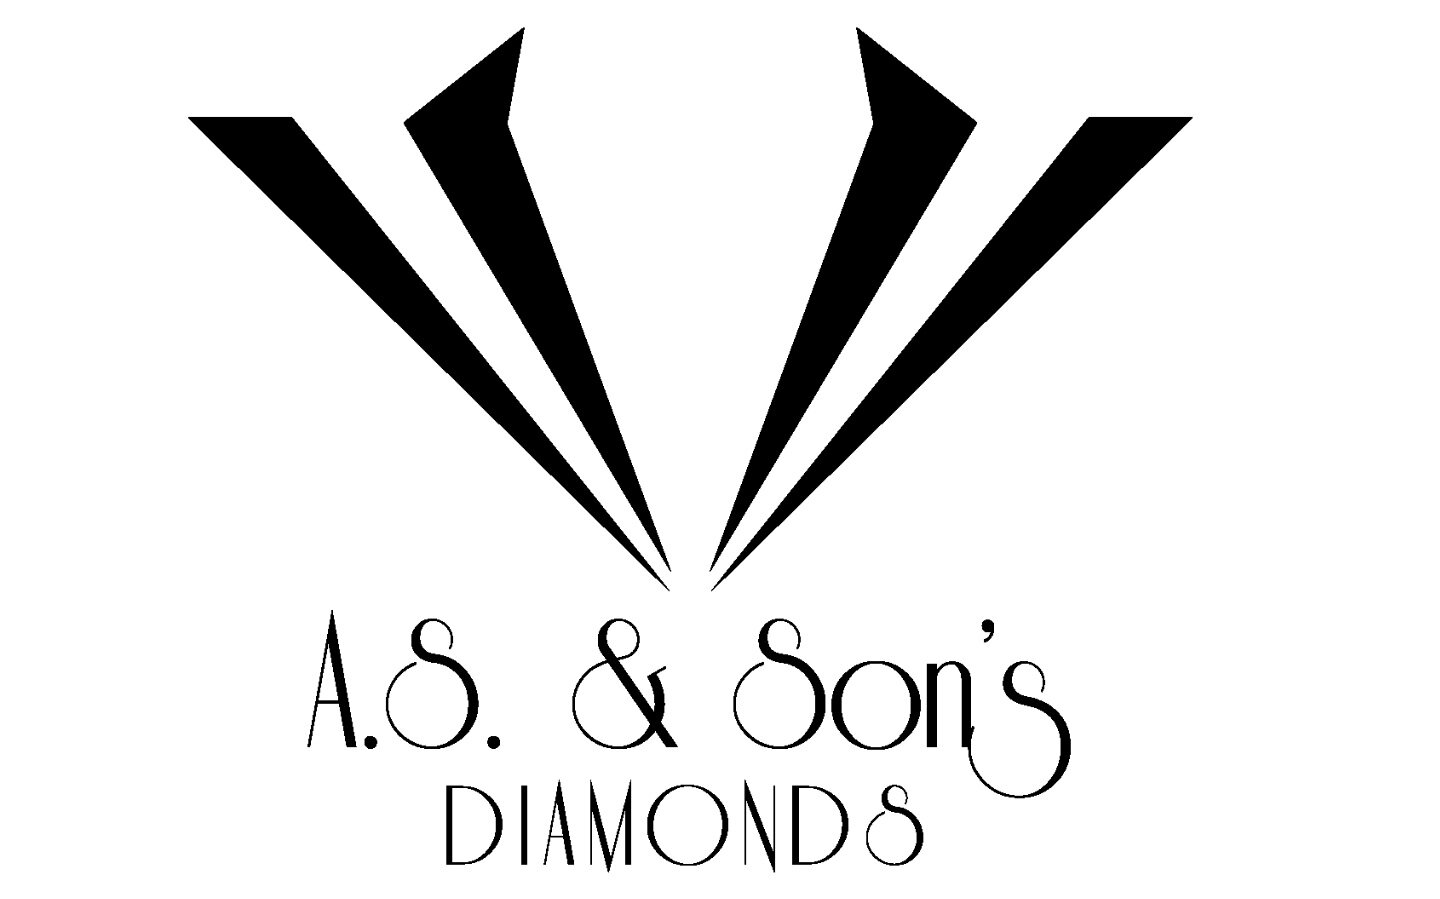   A.S &amp; Sons Diamonds                                             